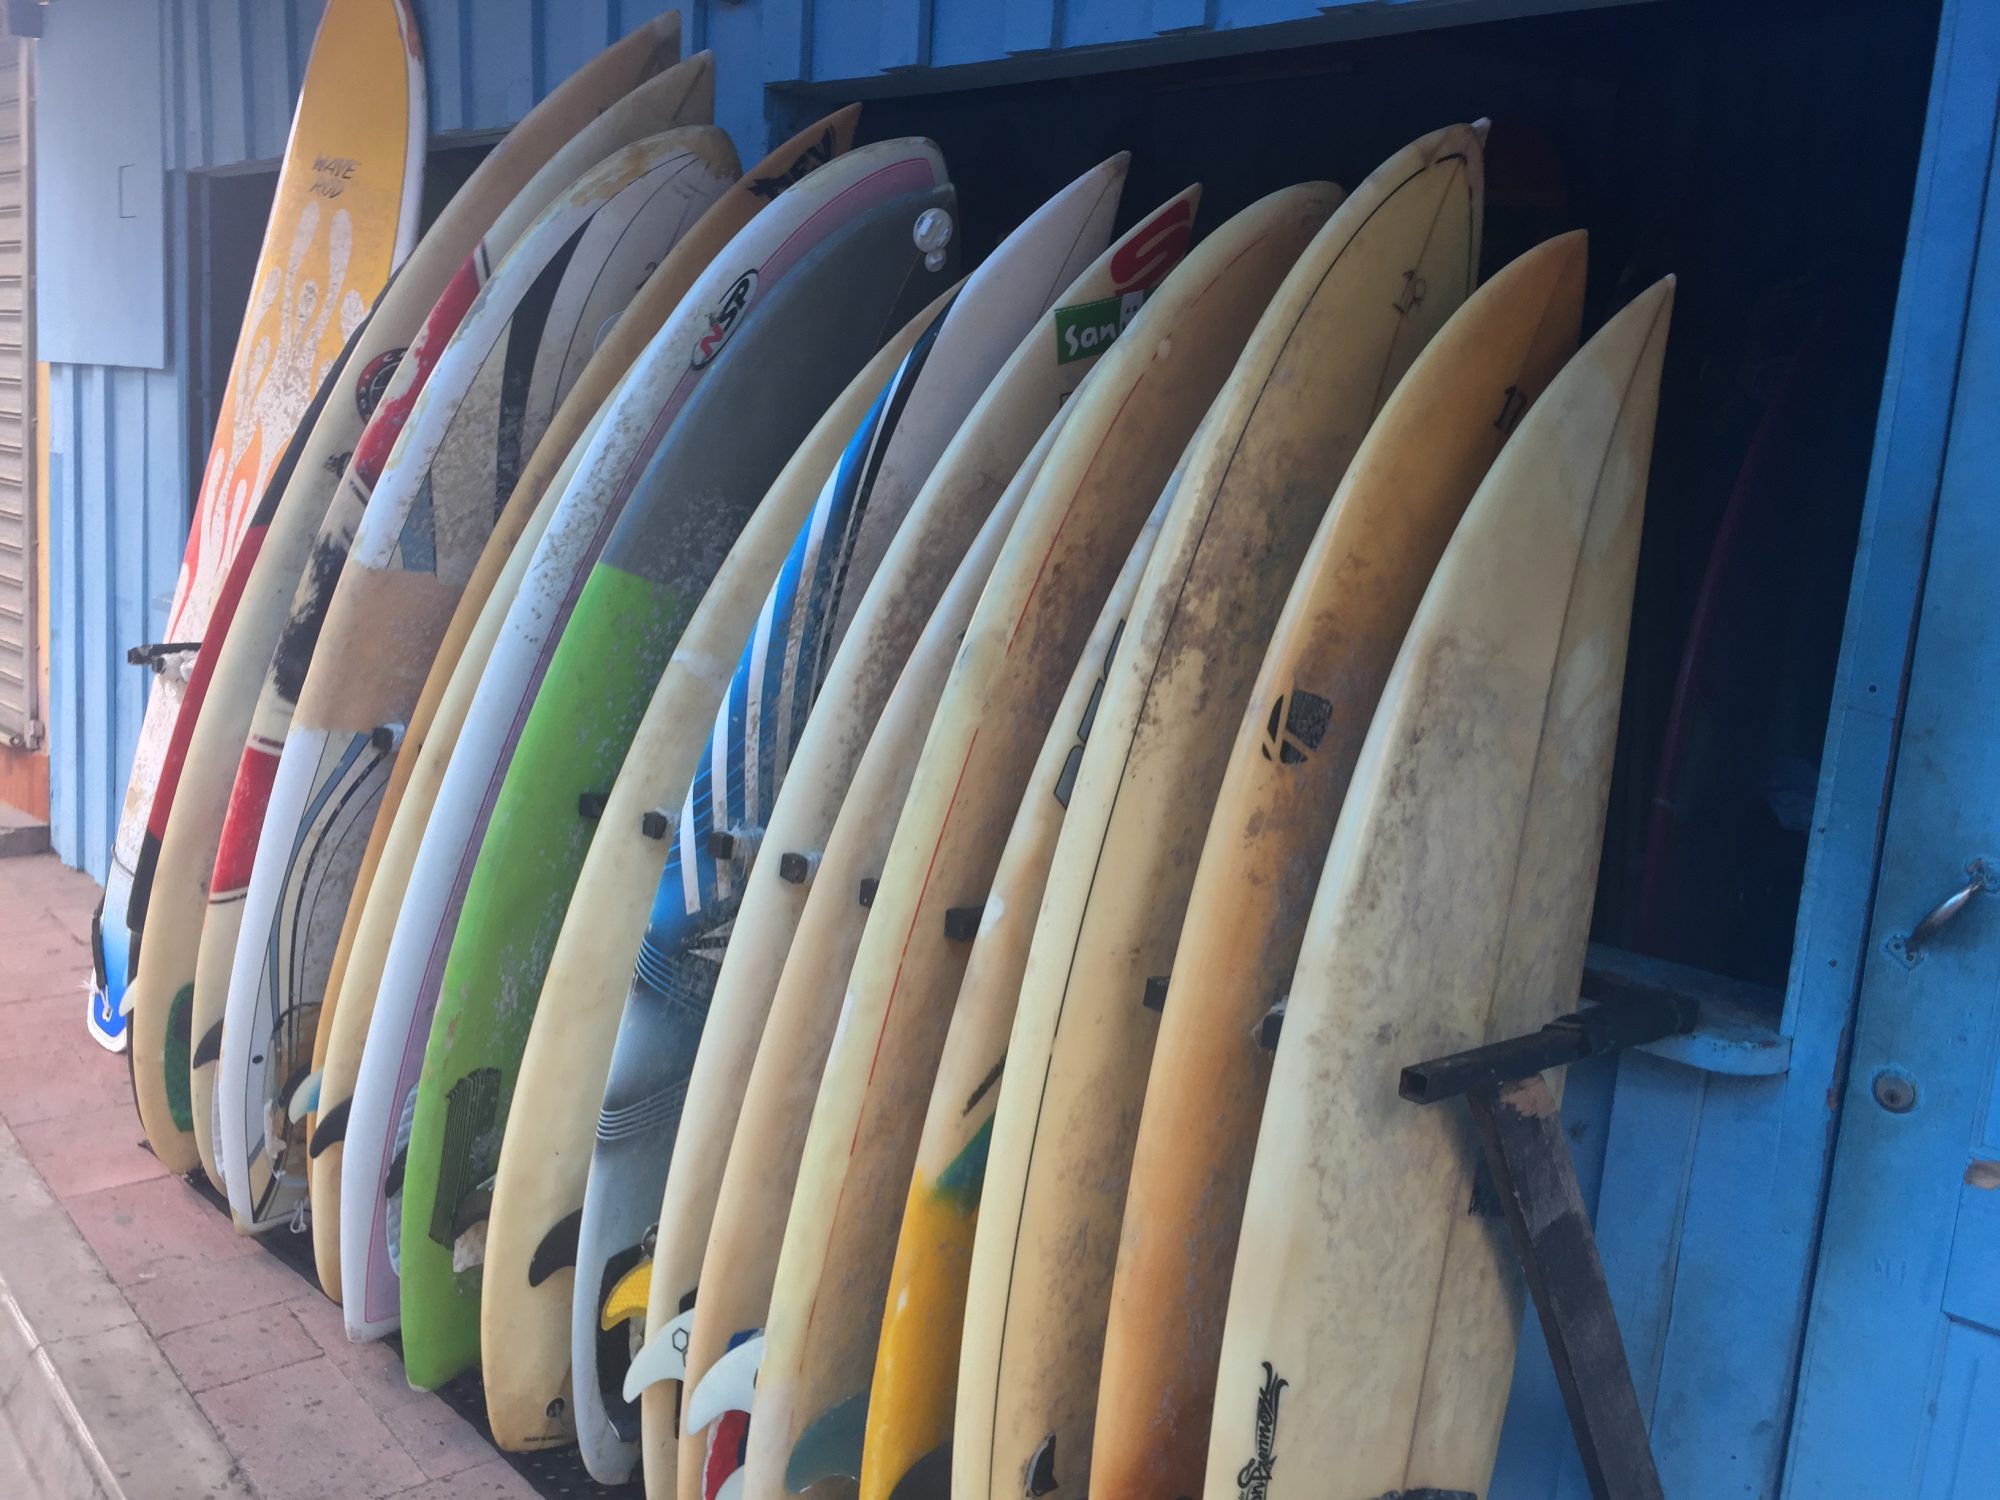 Day 69 – Surfing in El Tunco